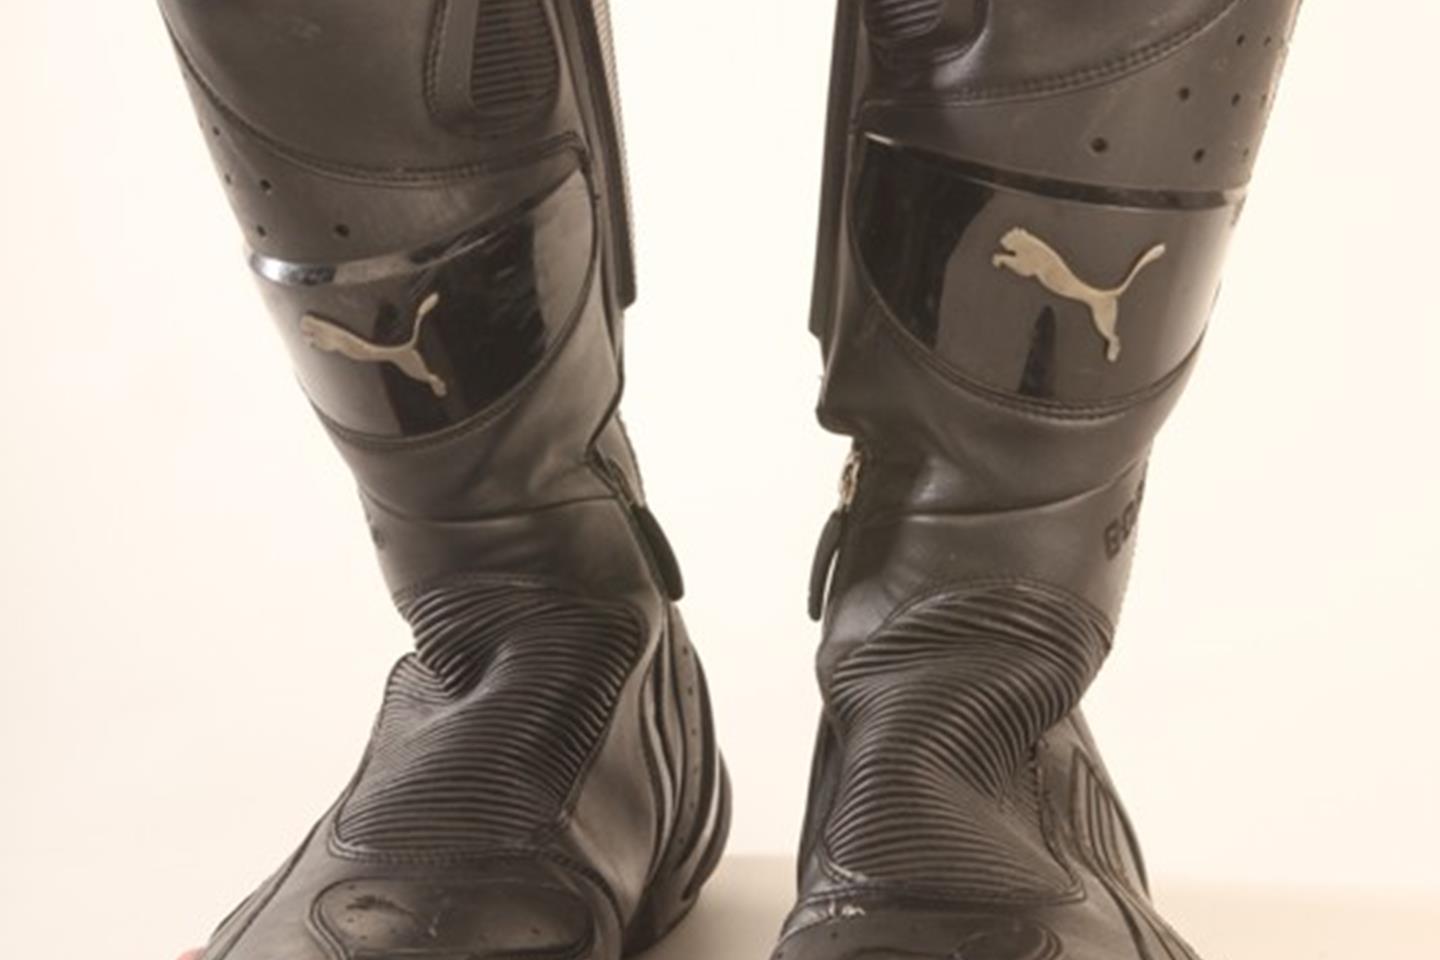 Boot review: Puma Desmo Gore-Tex boots 